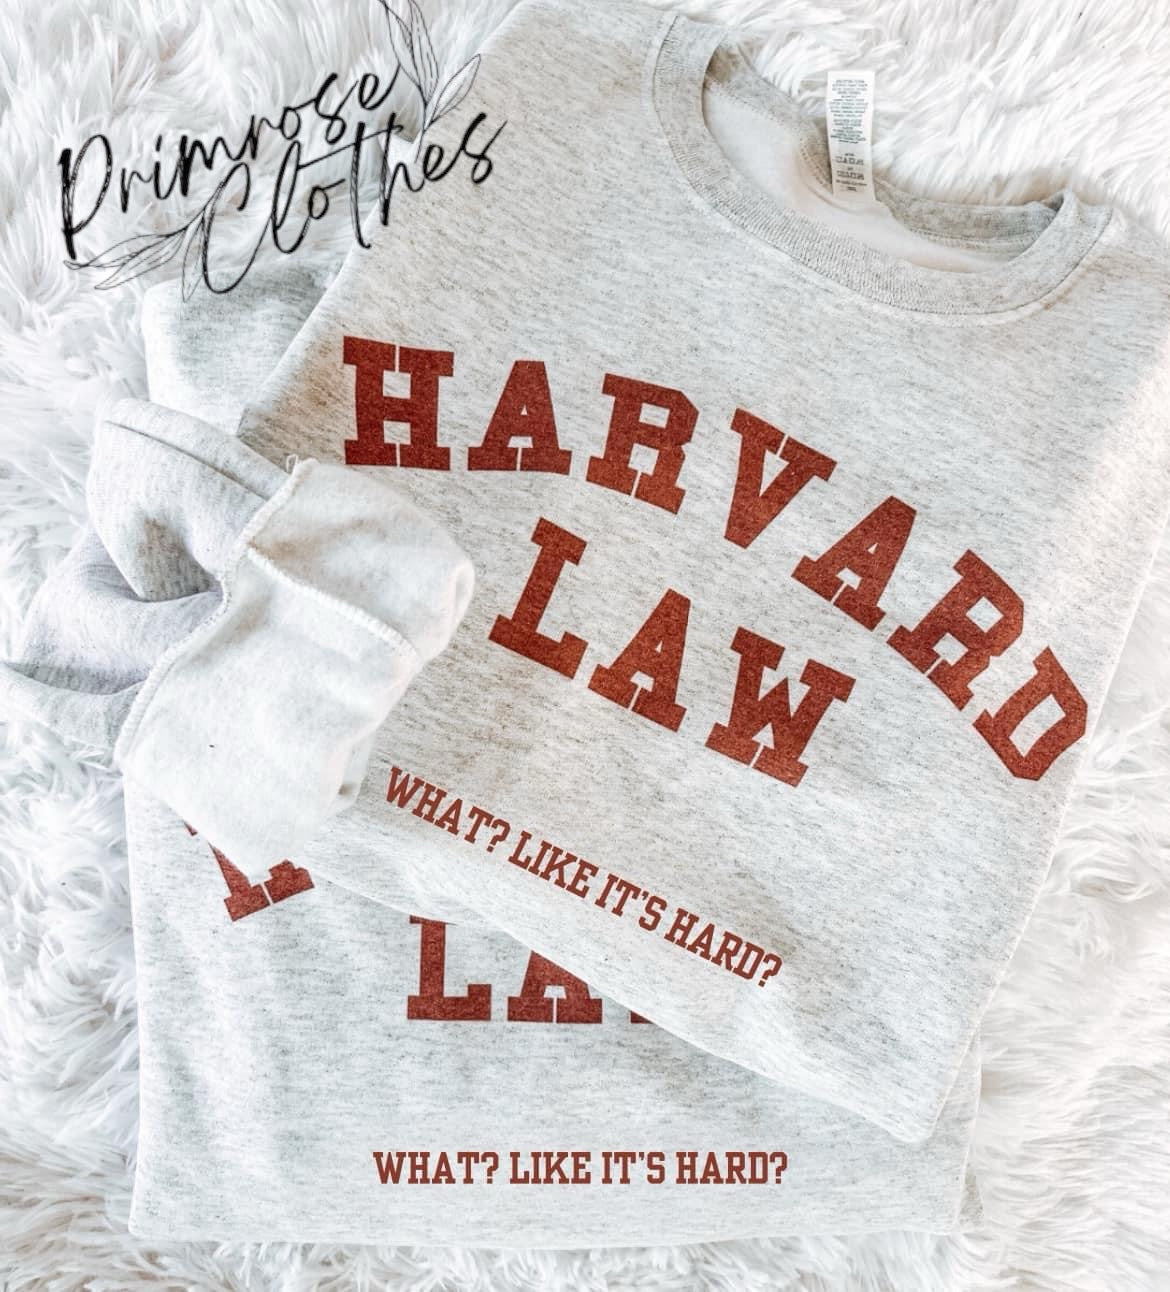 Harvard Law